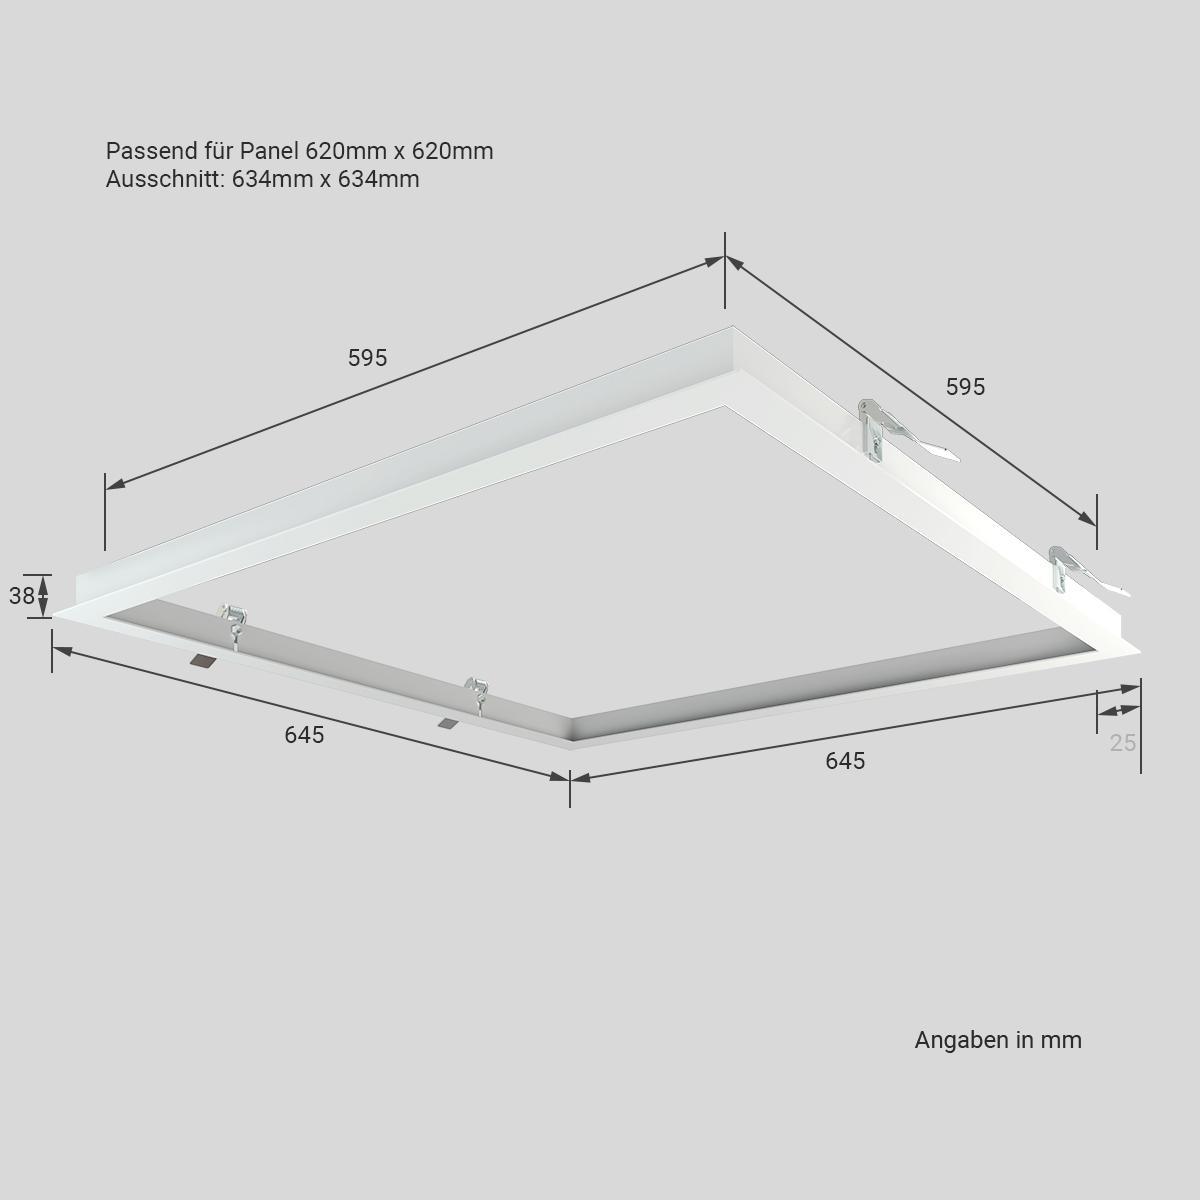 RGB+CCT LED Panel 62x62cm inkl. MiBoxer Smarthomesteuerung 48W 24V Rahmen weiß - Panelmontage: Einbaurahmen weiß